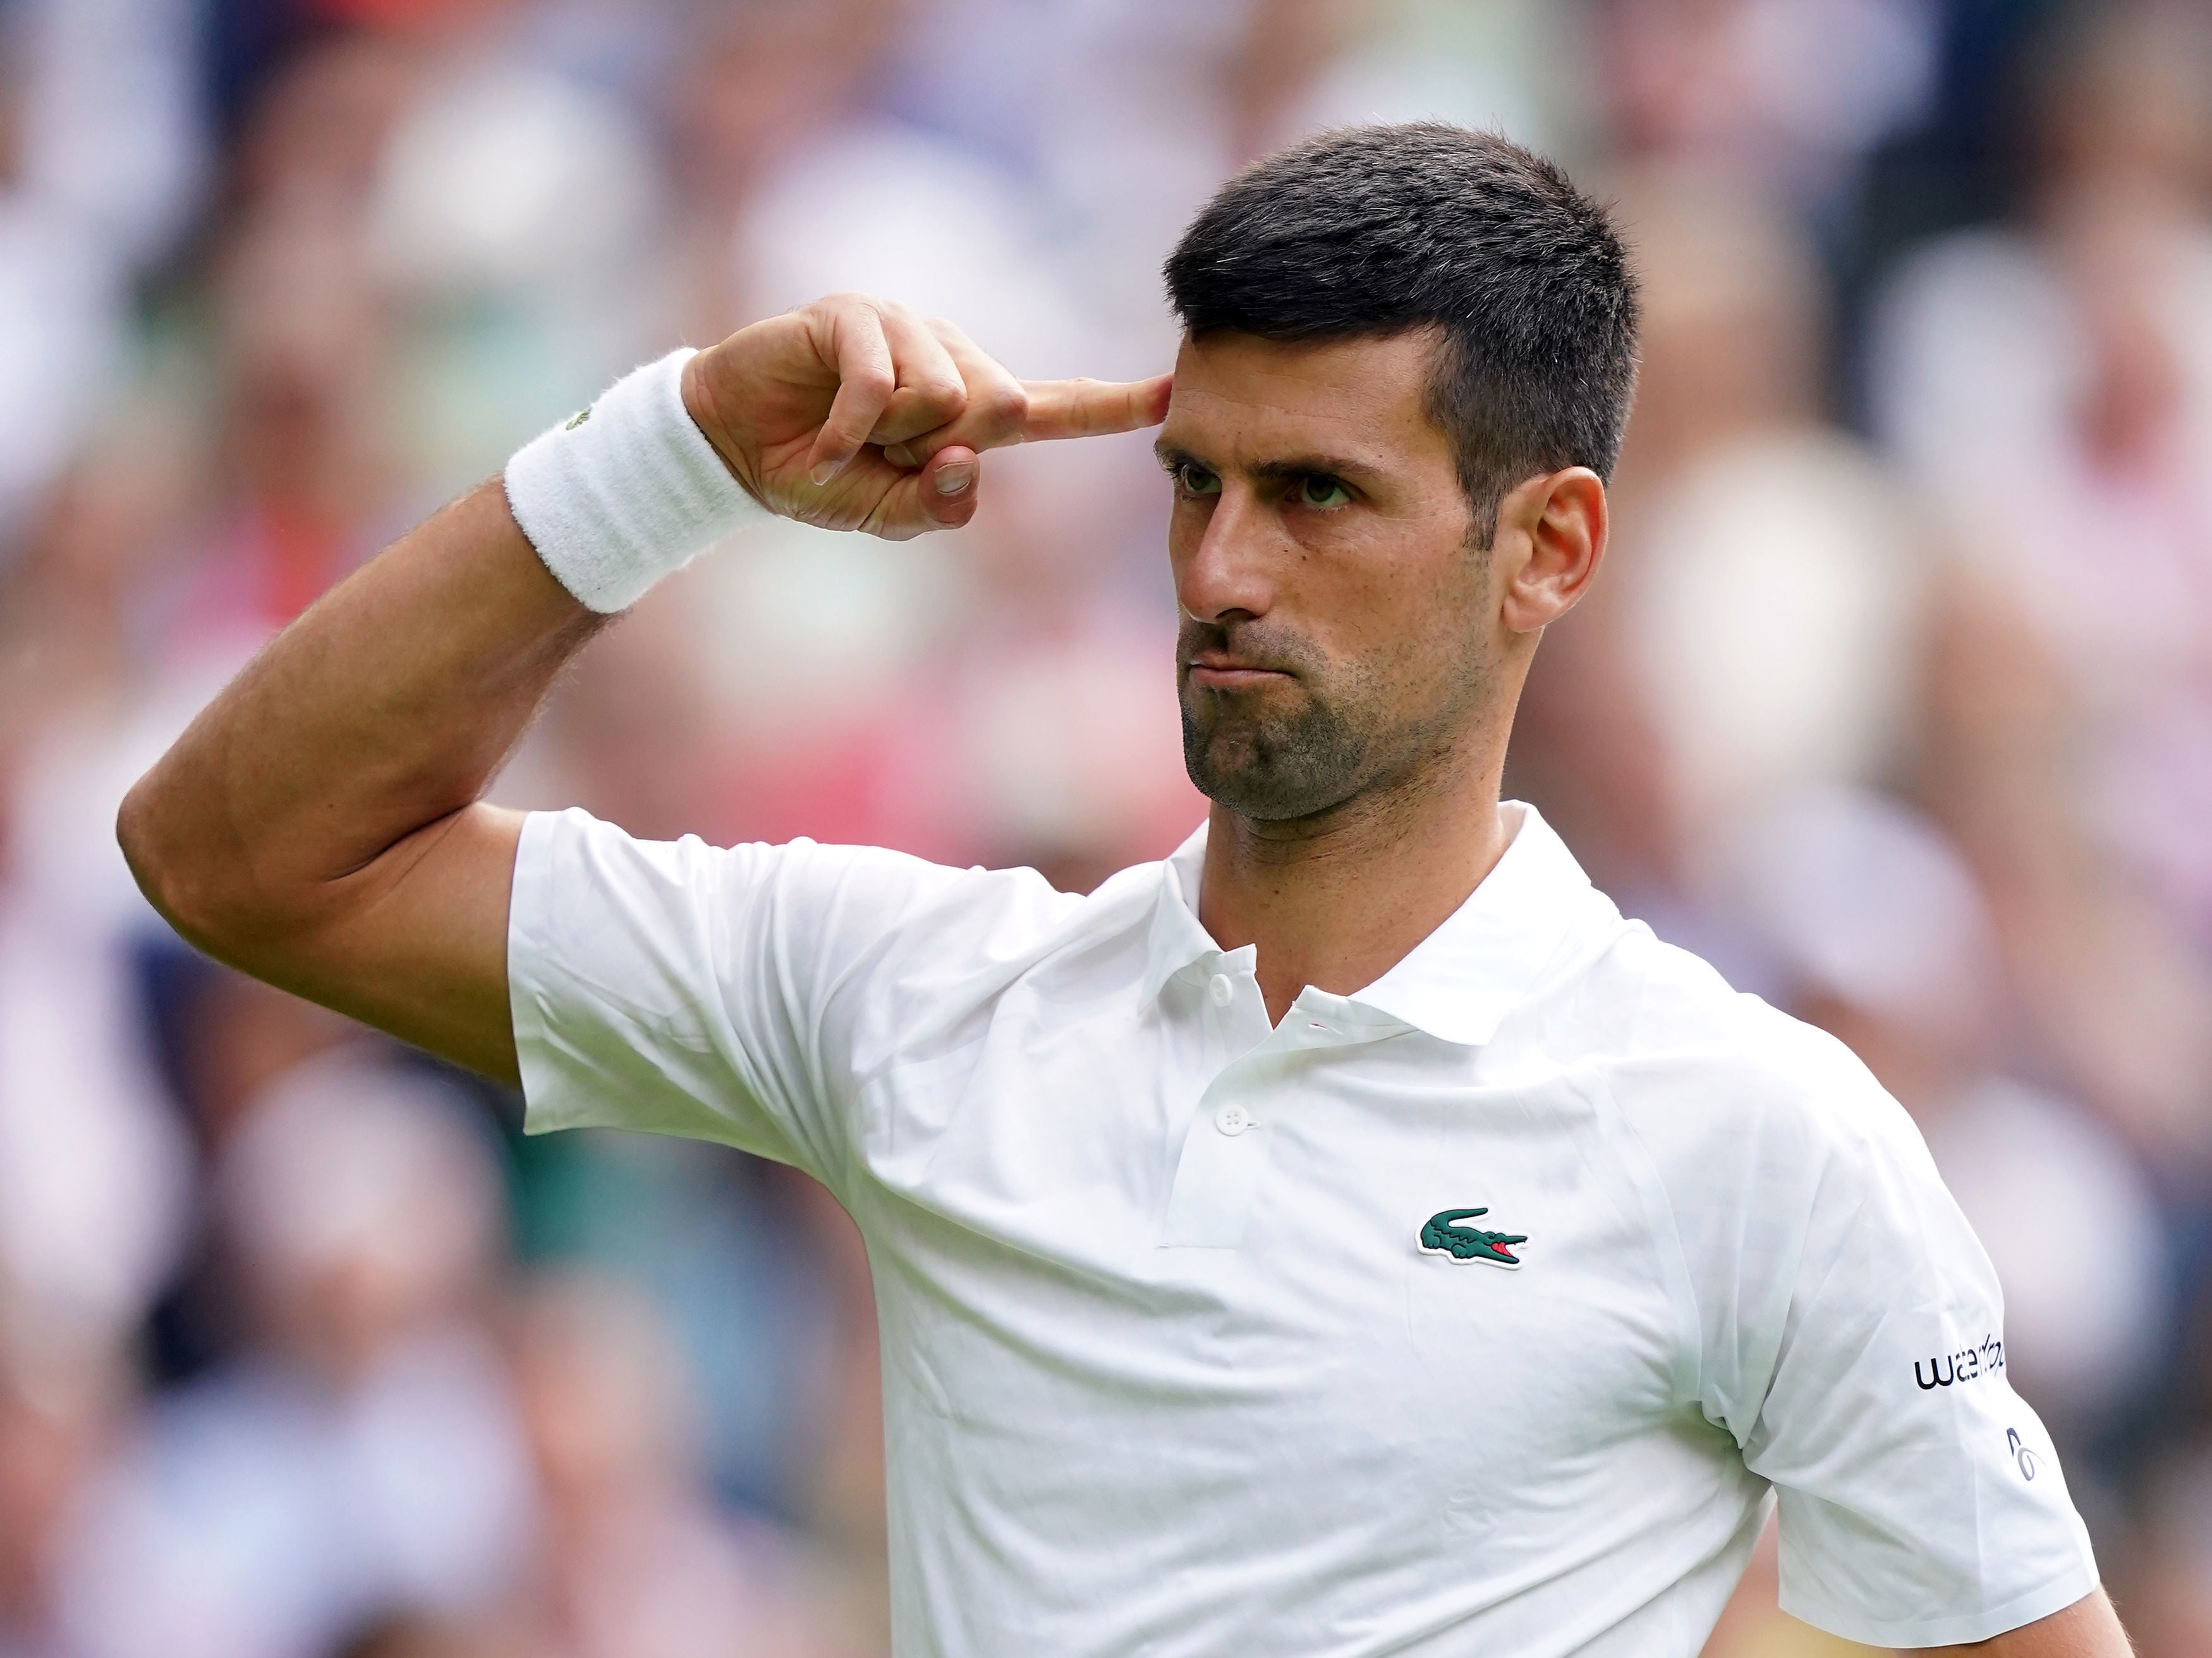 Novak Djokovic celebrates winning the second set during his match against Jordan Thompson